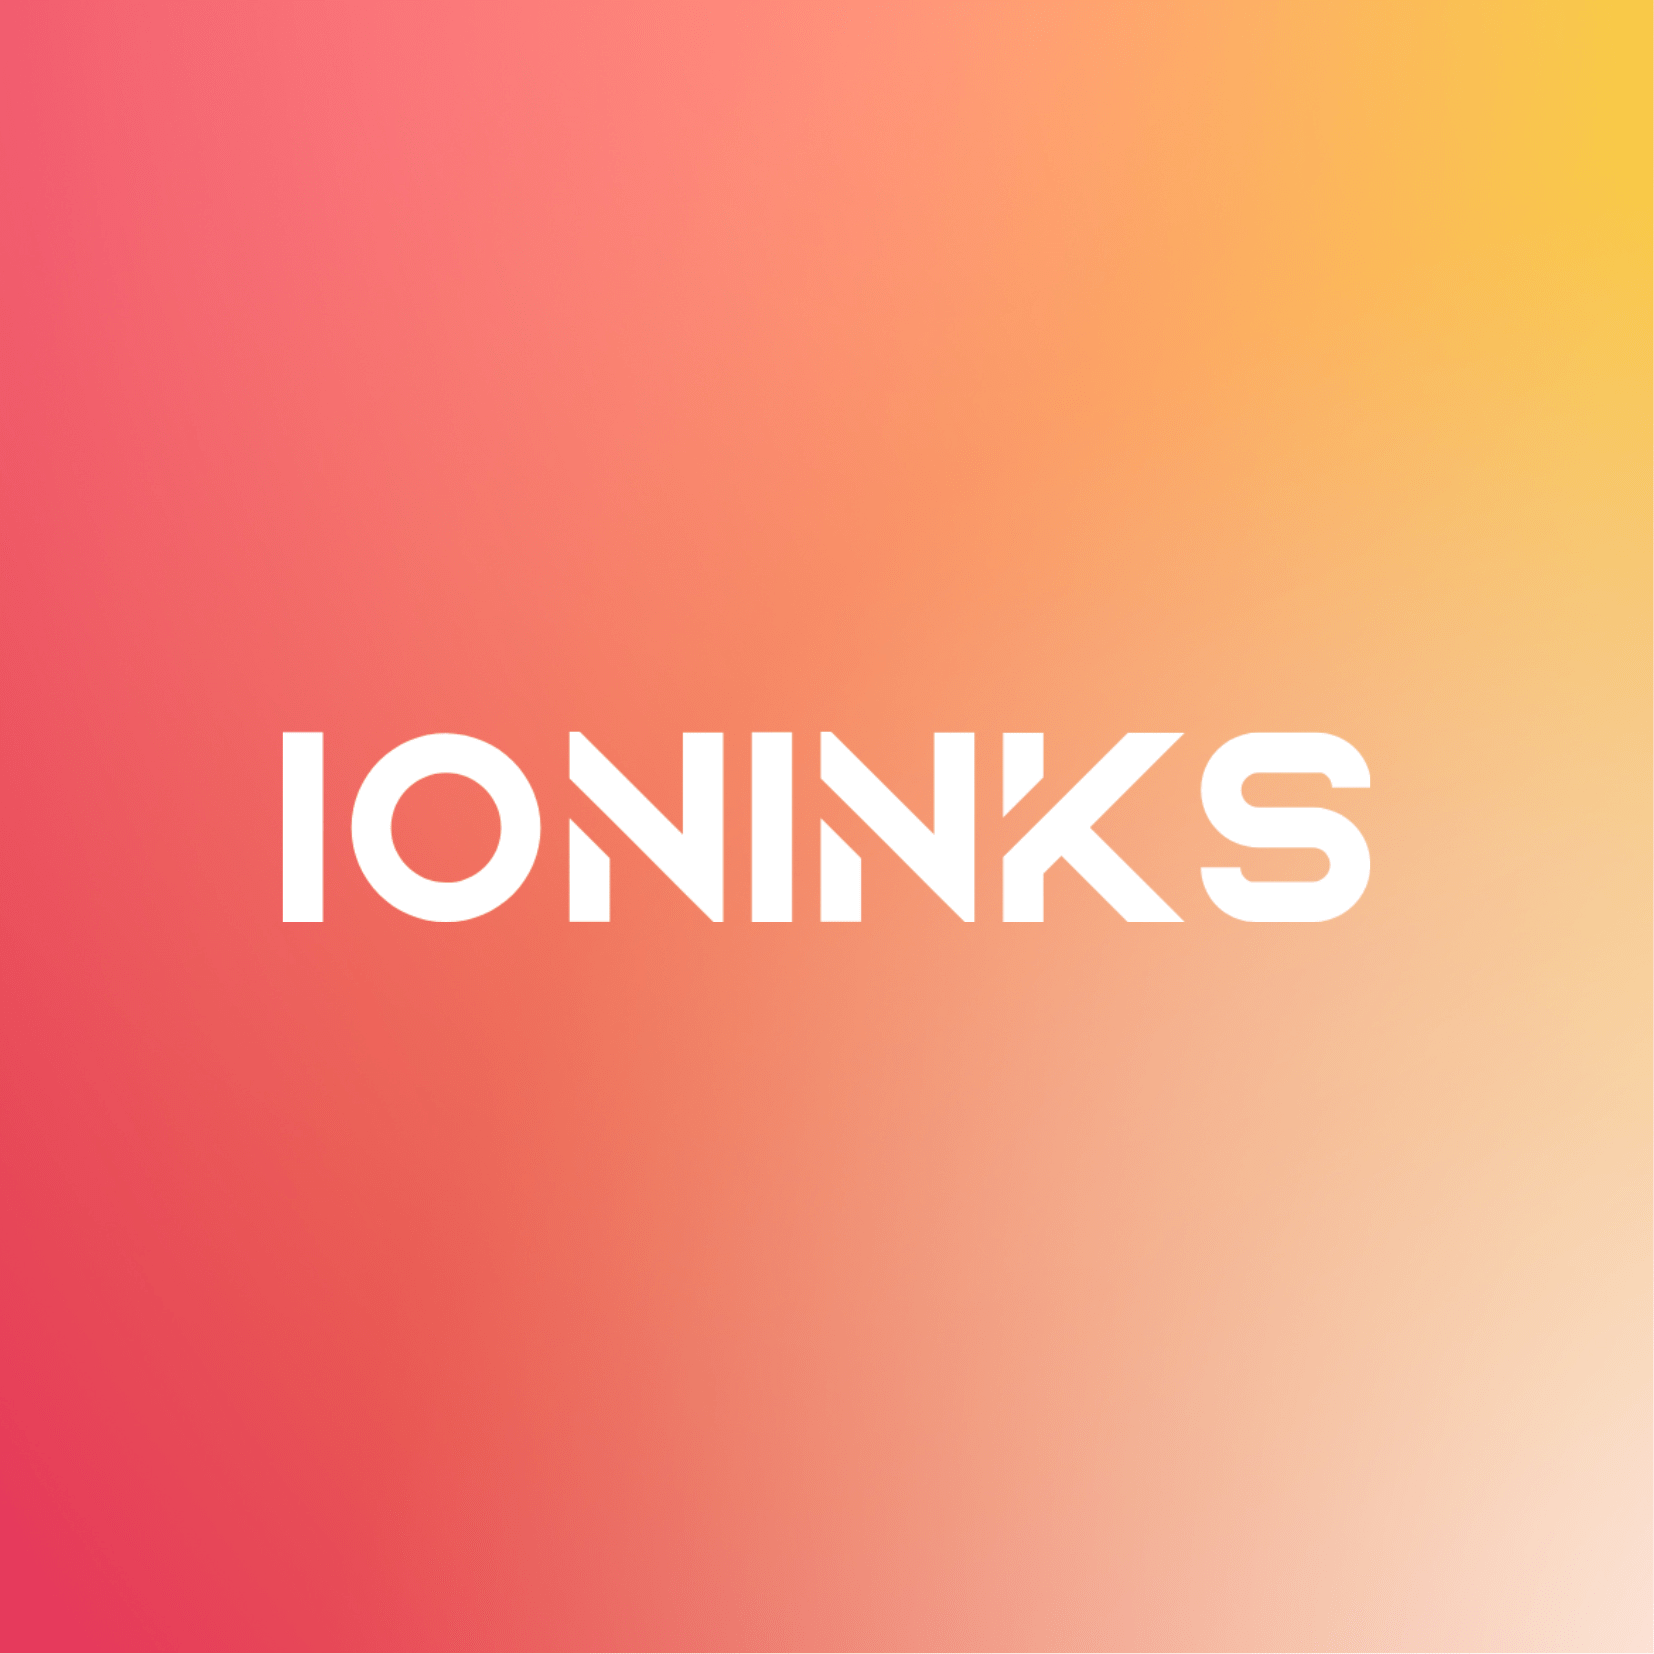 ioninks -ioninks